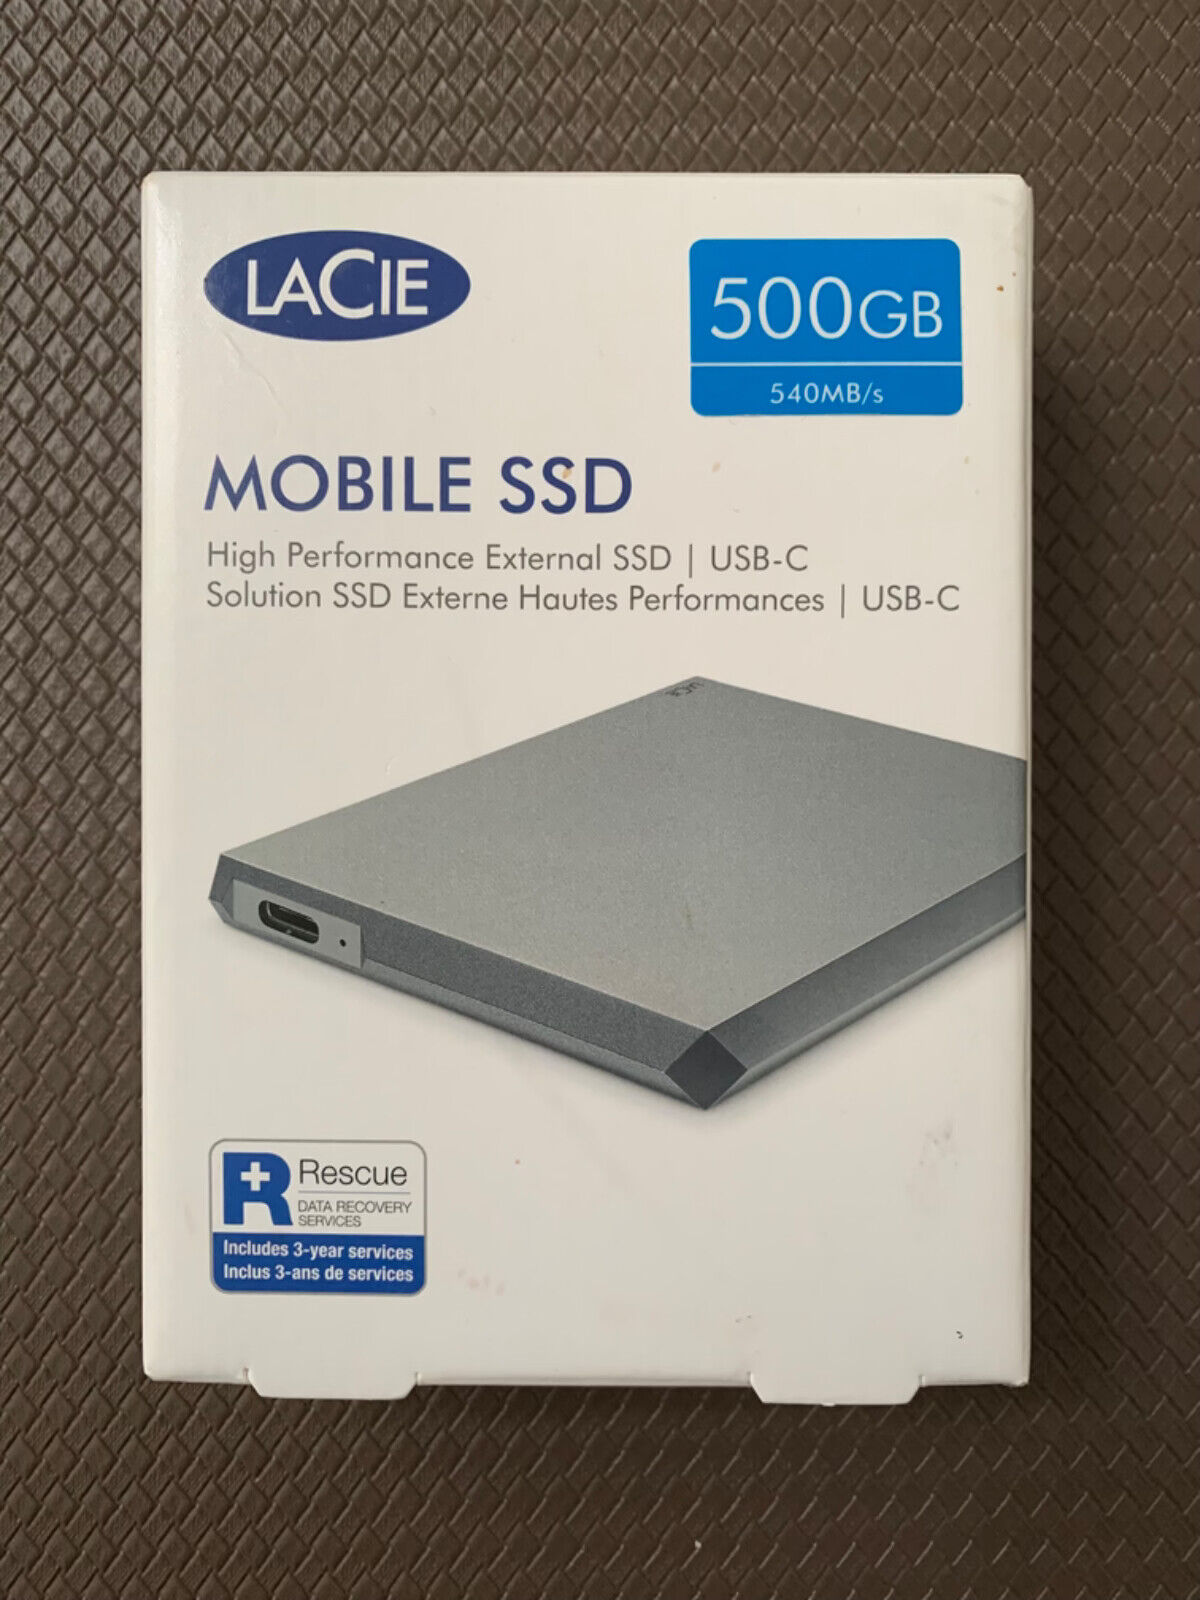 LaCie Mobile SSD 500GB High Performance External SSD USB-C